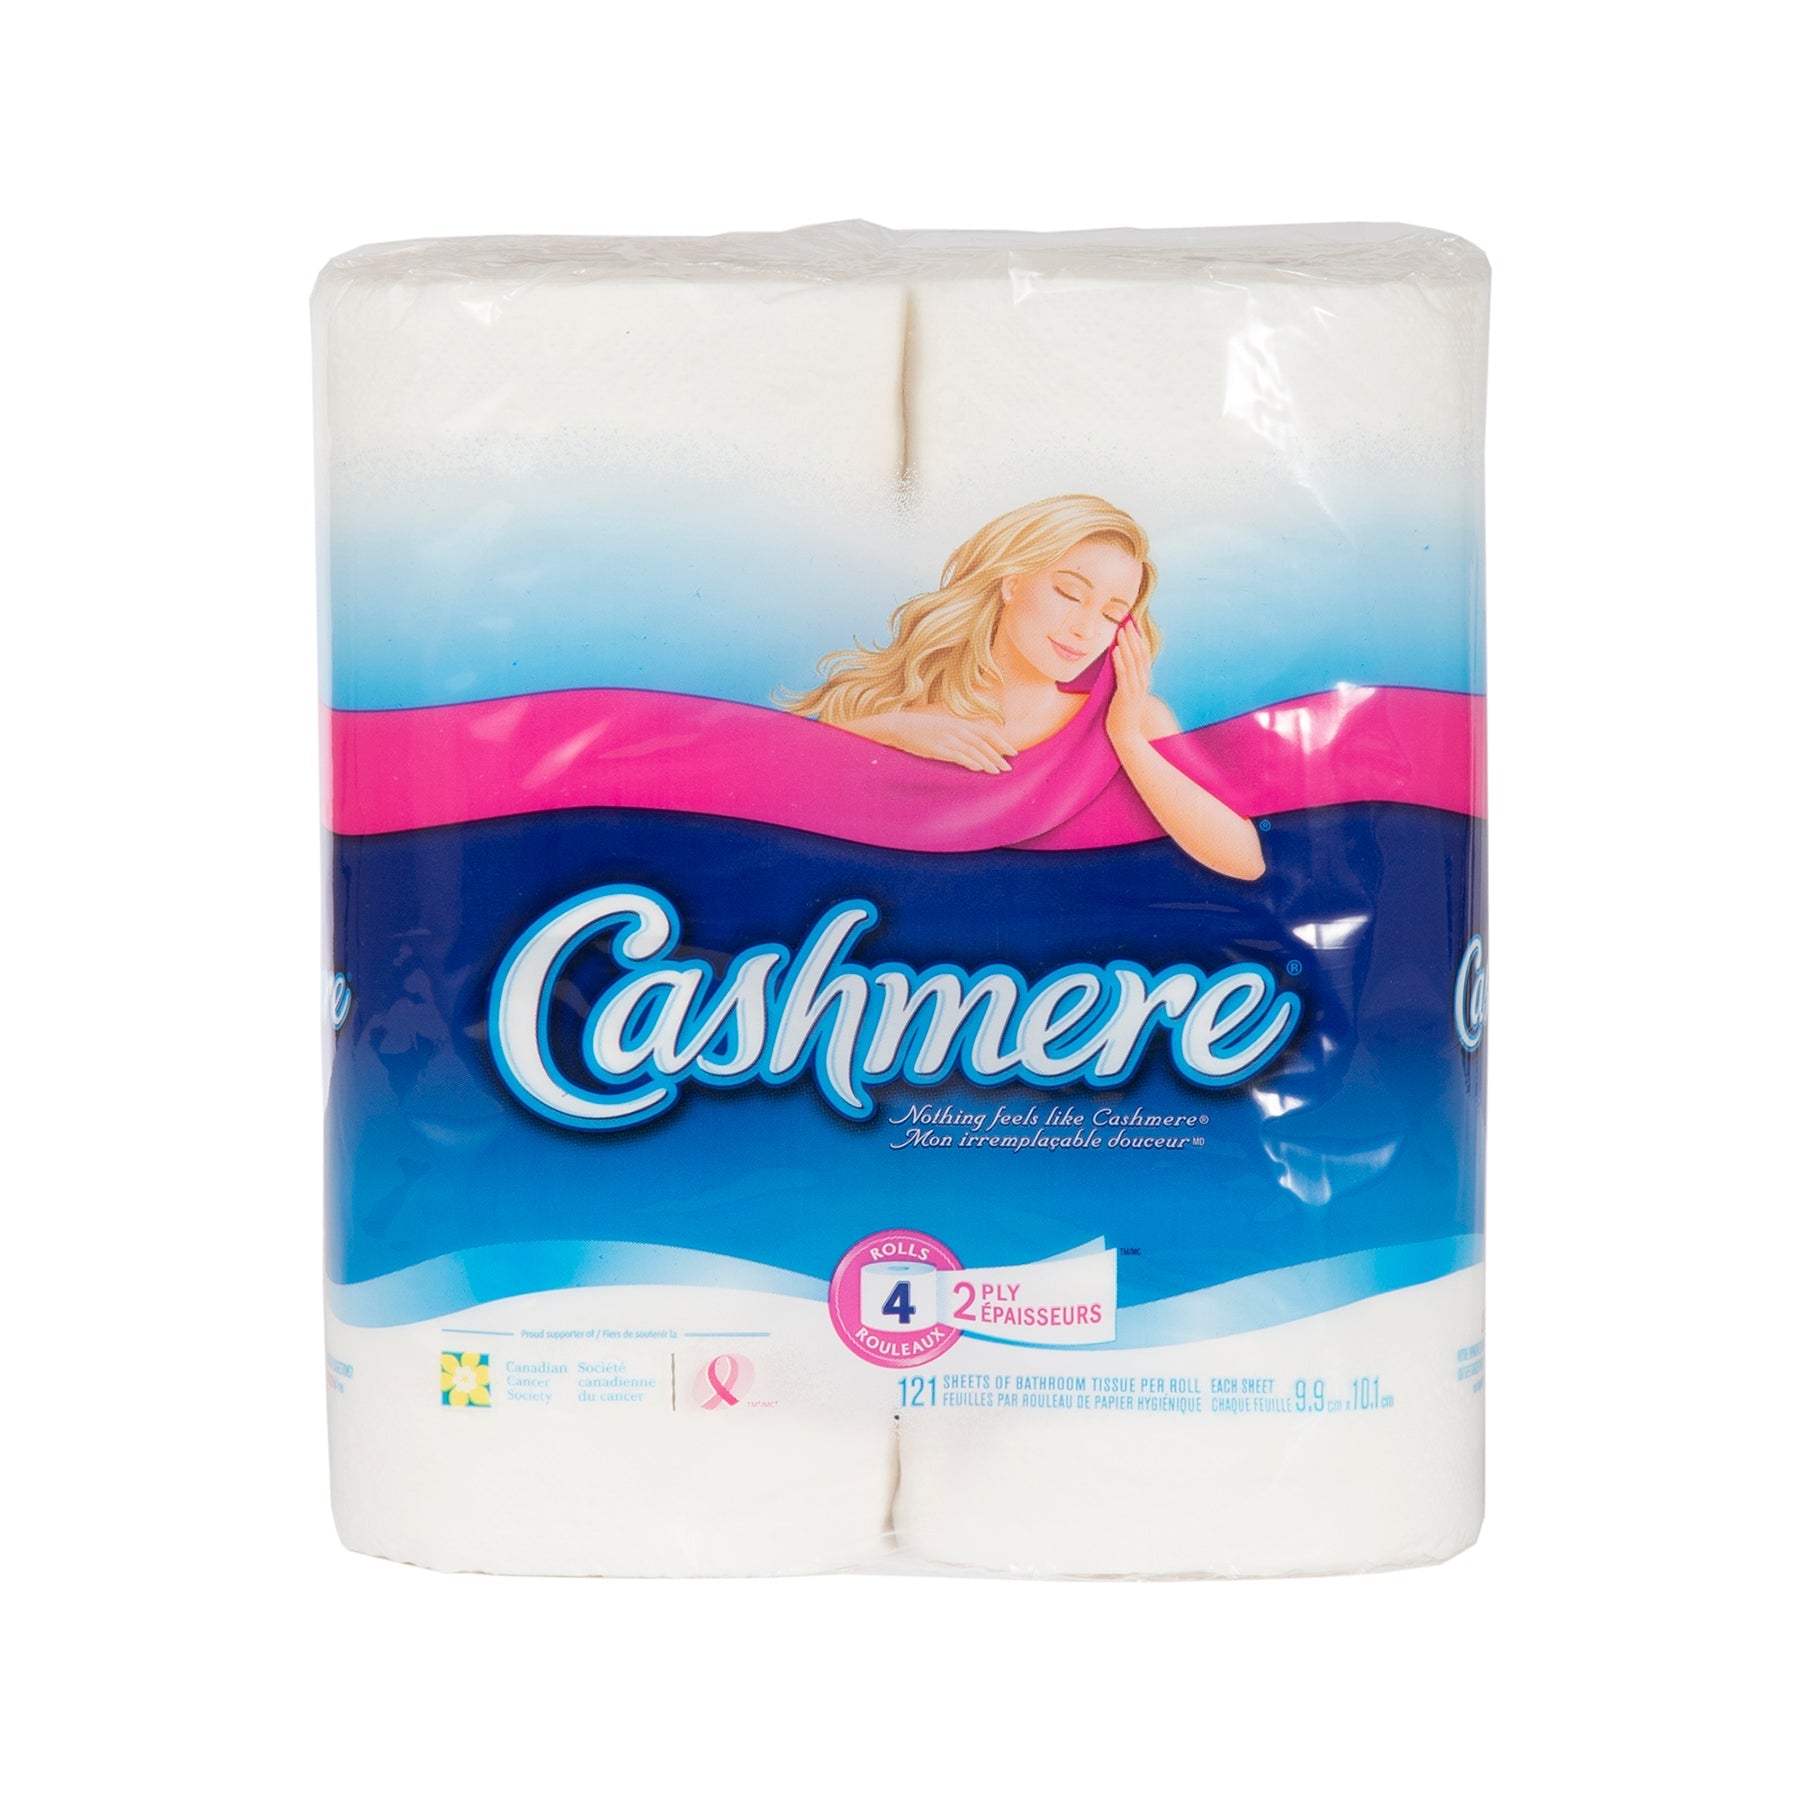 Cashmere 4 Rolls/ Pk of Toilet Tissue 121 sheet / roll 